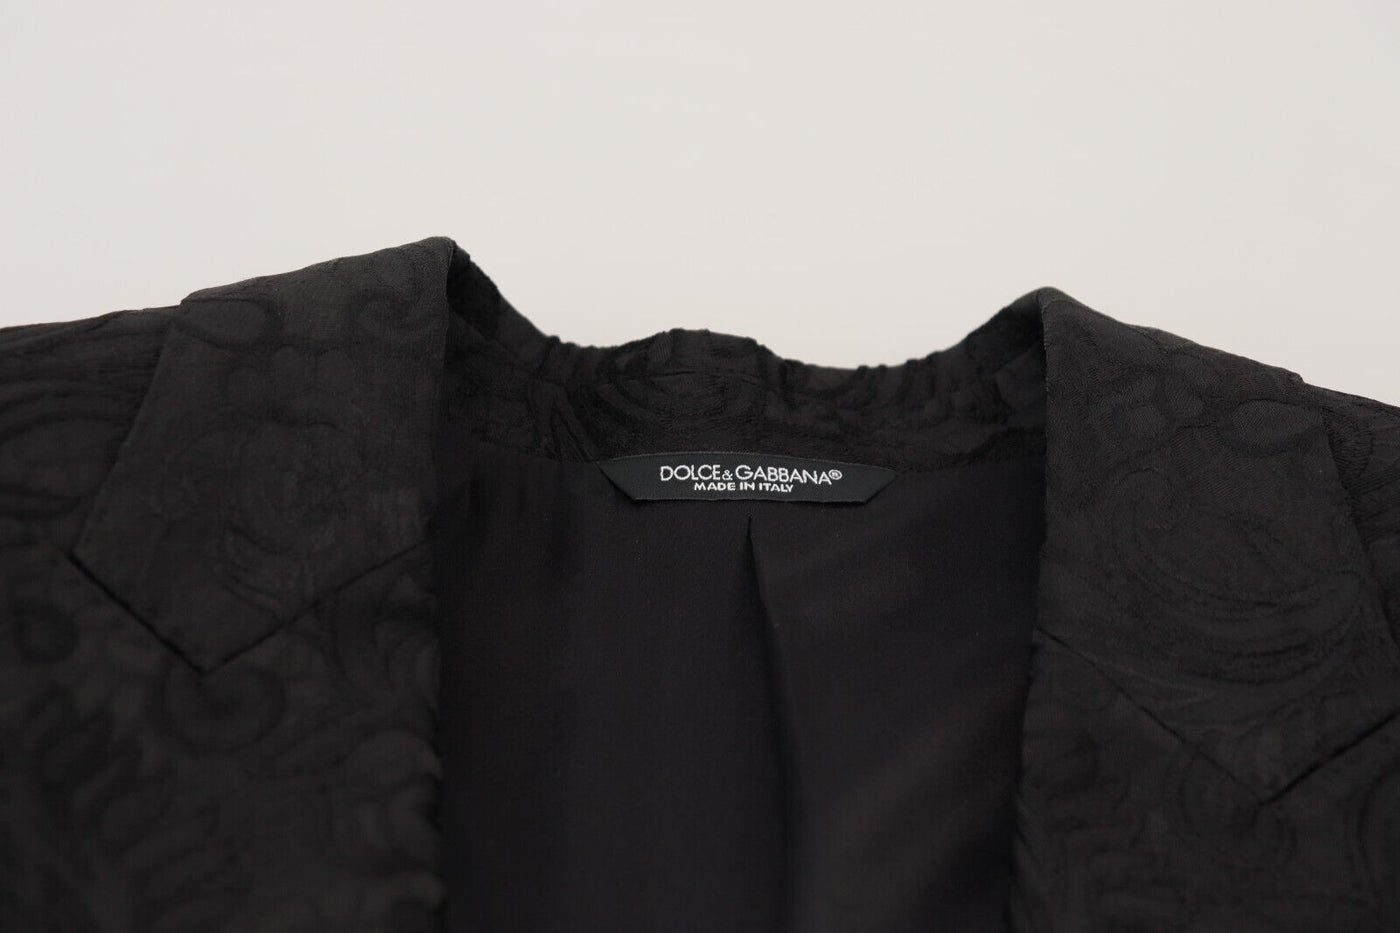 Dolce & Gabbana Black Floral Jacquard Single Breasted MARTINI Blazer